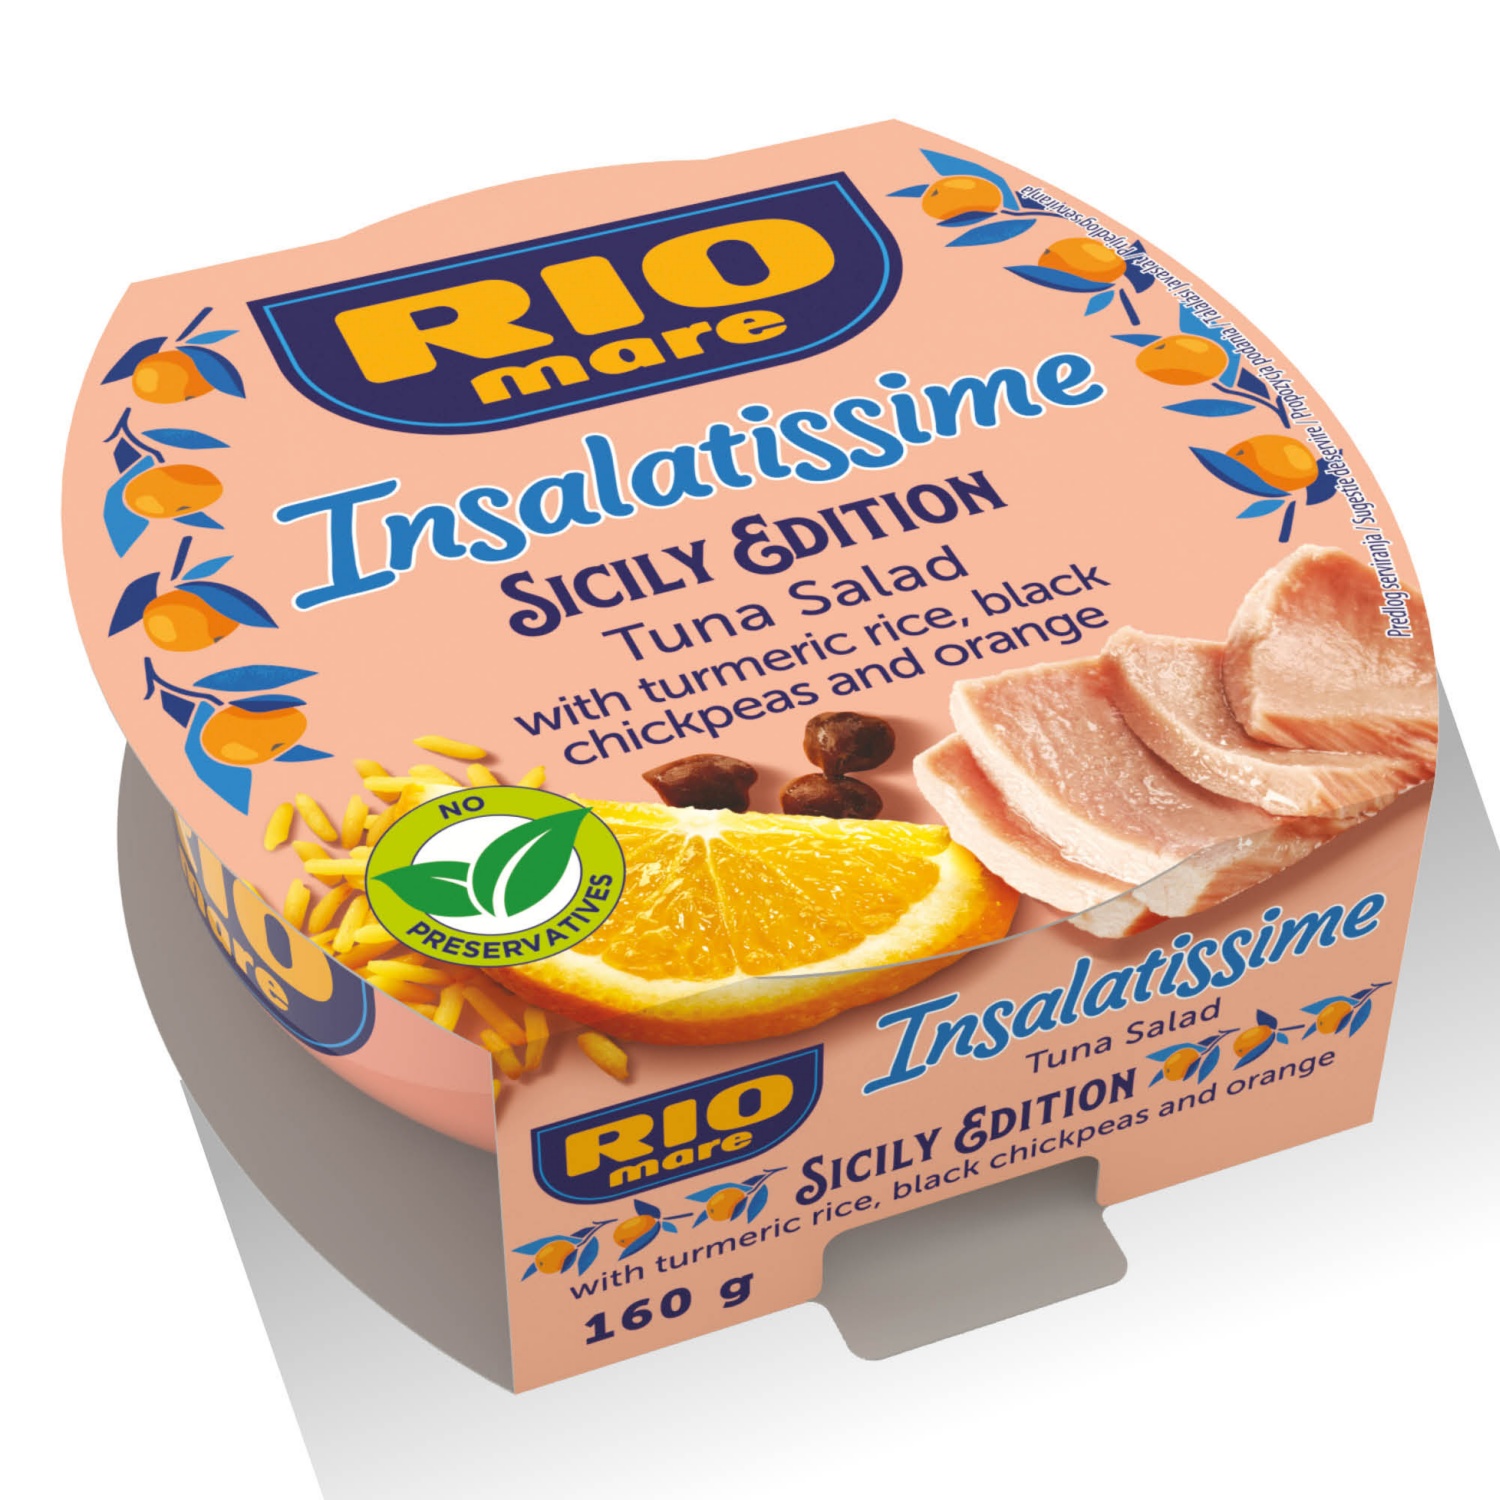 RIO MARE Insalatissime tonhalsaláta, szicíliai, 160 g